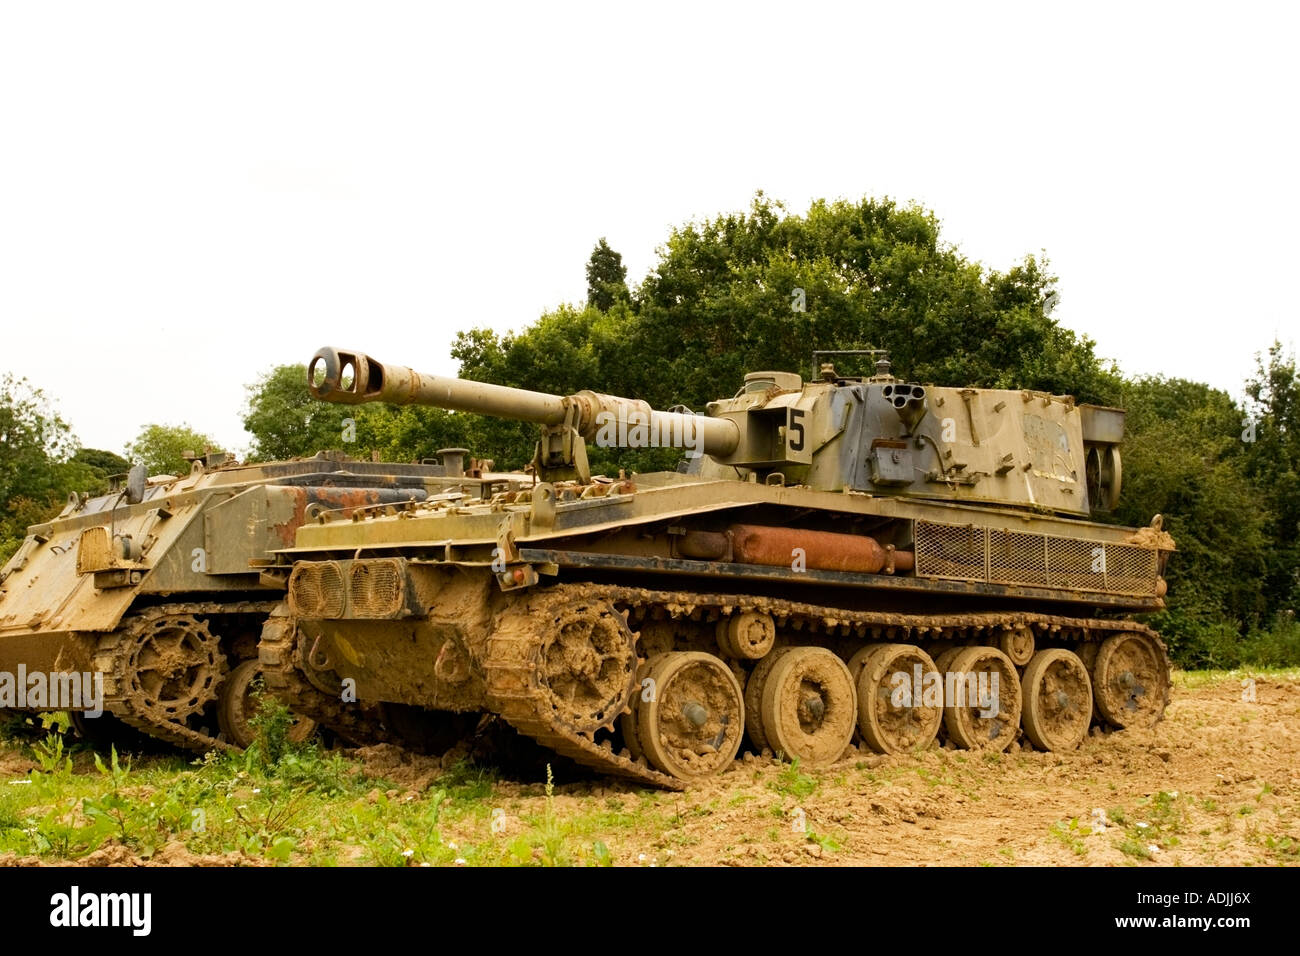 a-pair-of-ex-british-army-tanks-covered-in-mud-ADJJ6X.jpg